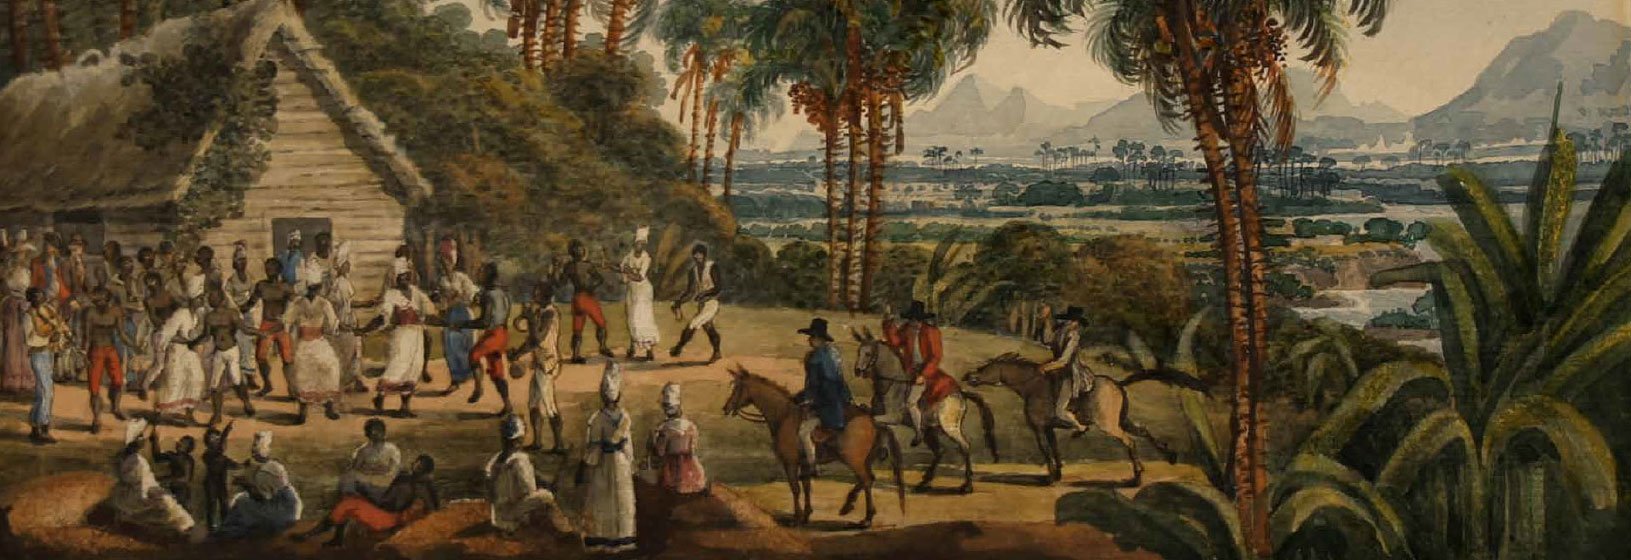 Martinique - French Colony, Caribbean, Slavery